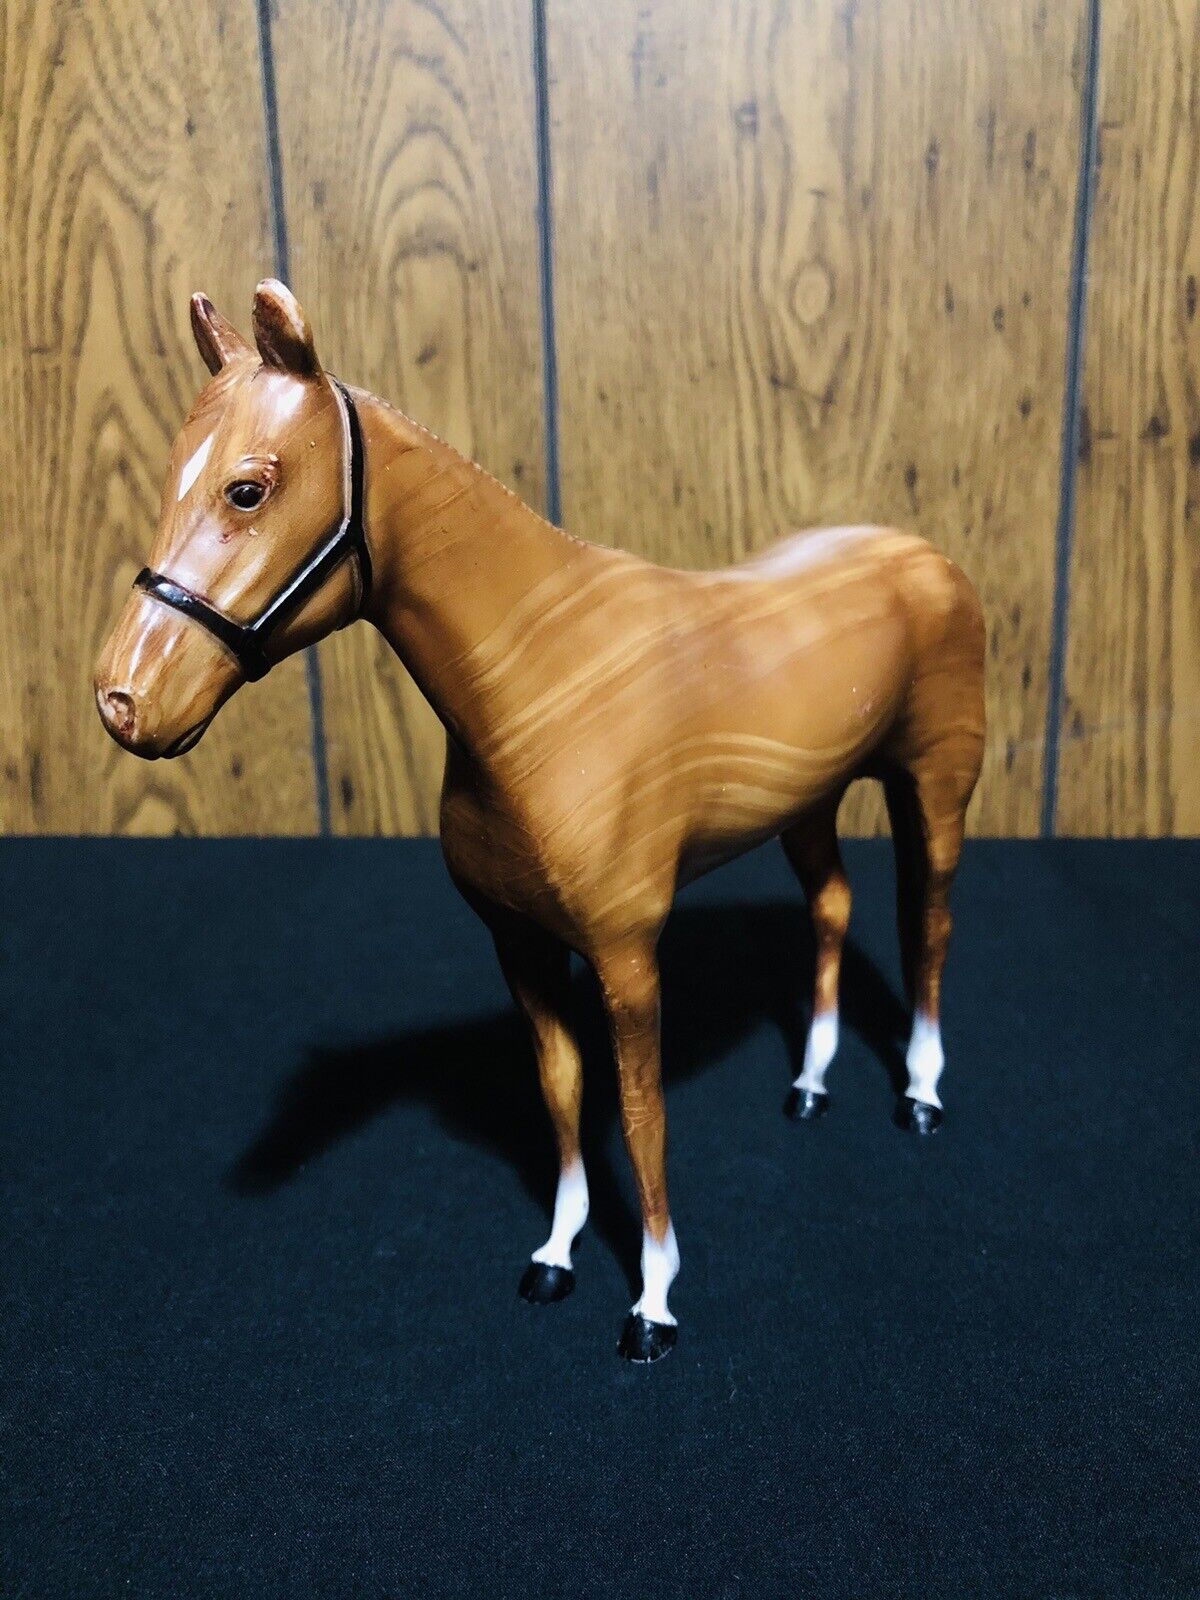 RARE 1959-65 vintage Breyer woodgrain Racehorse excellent condition